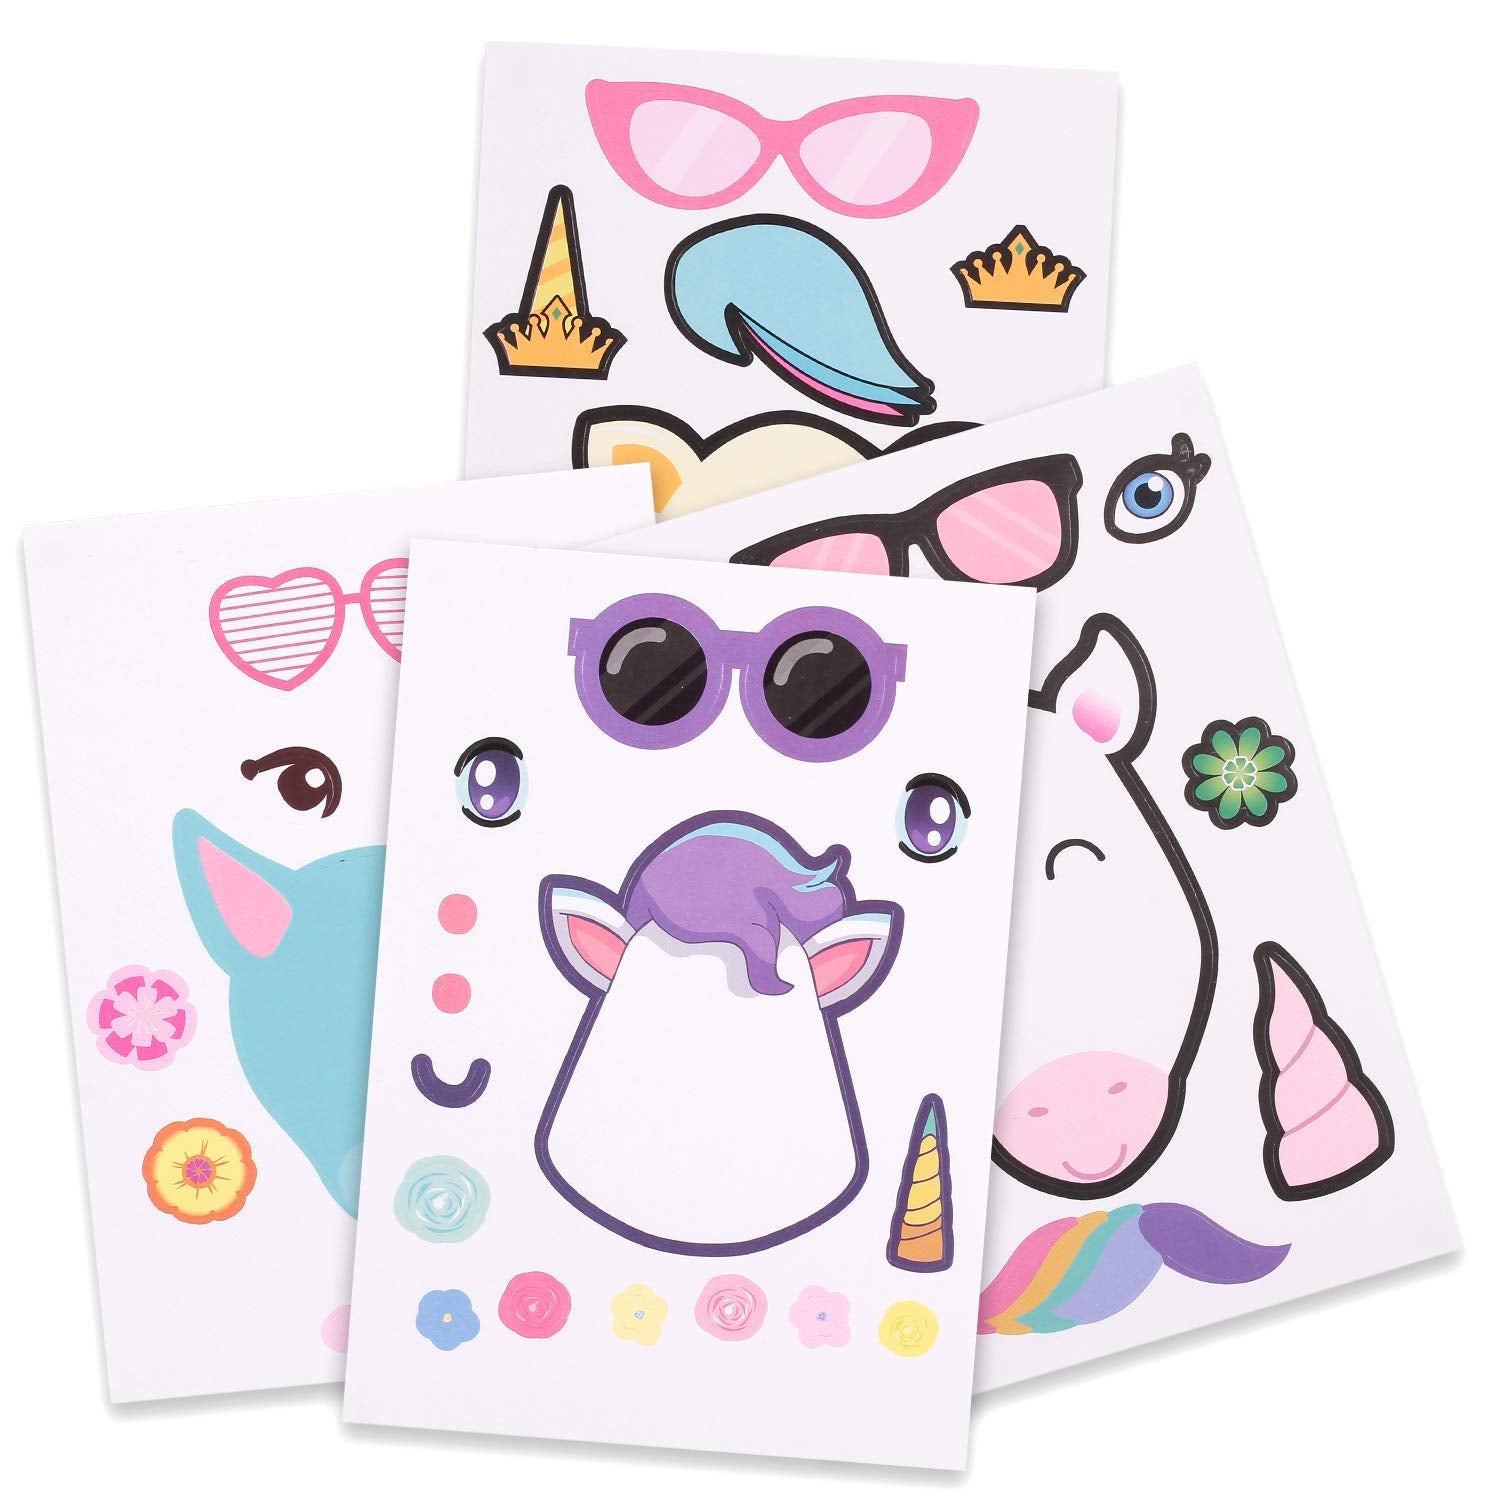 Unicorn Party Bag Fillers - Make A Unicorn Sticker Sets (24 Pack)